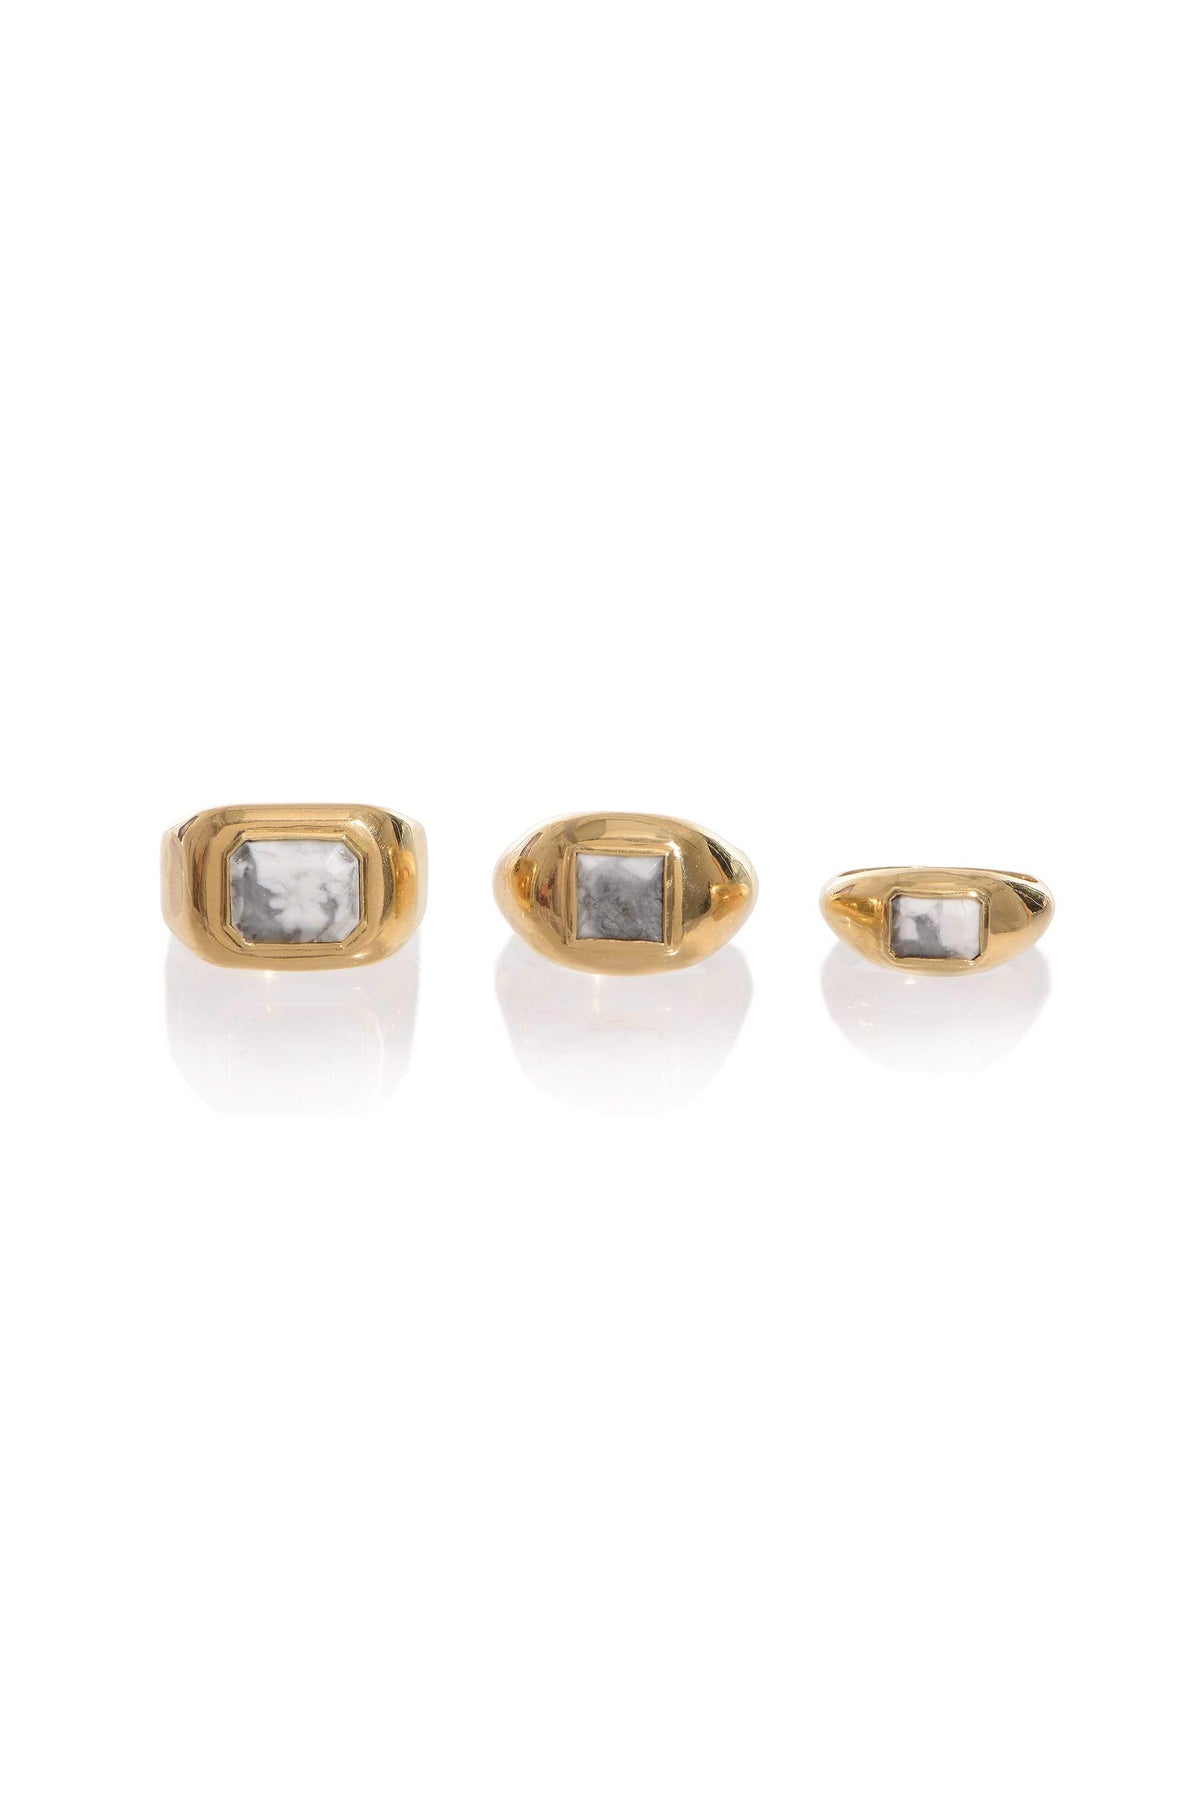 Medium Ring 18K Gold & Howlite Stone